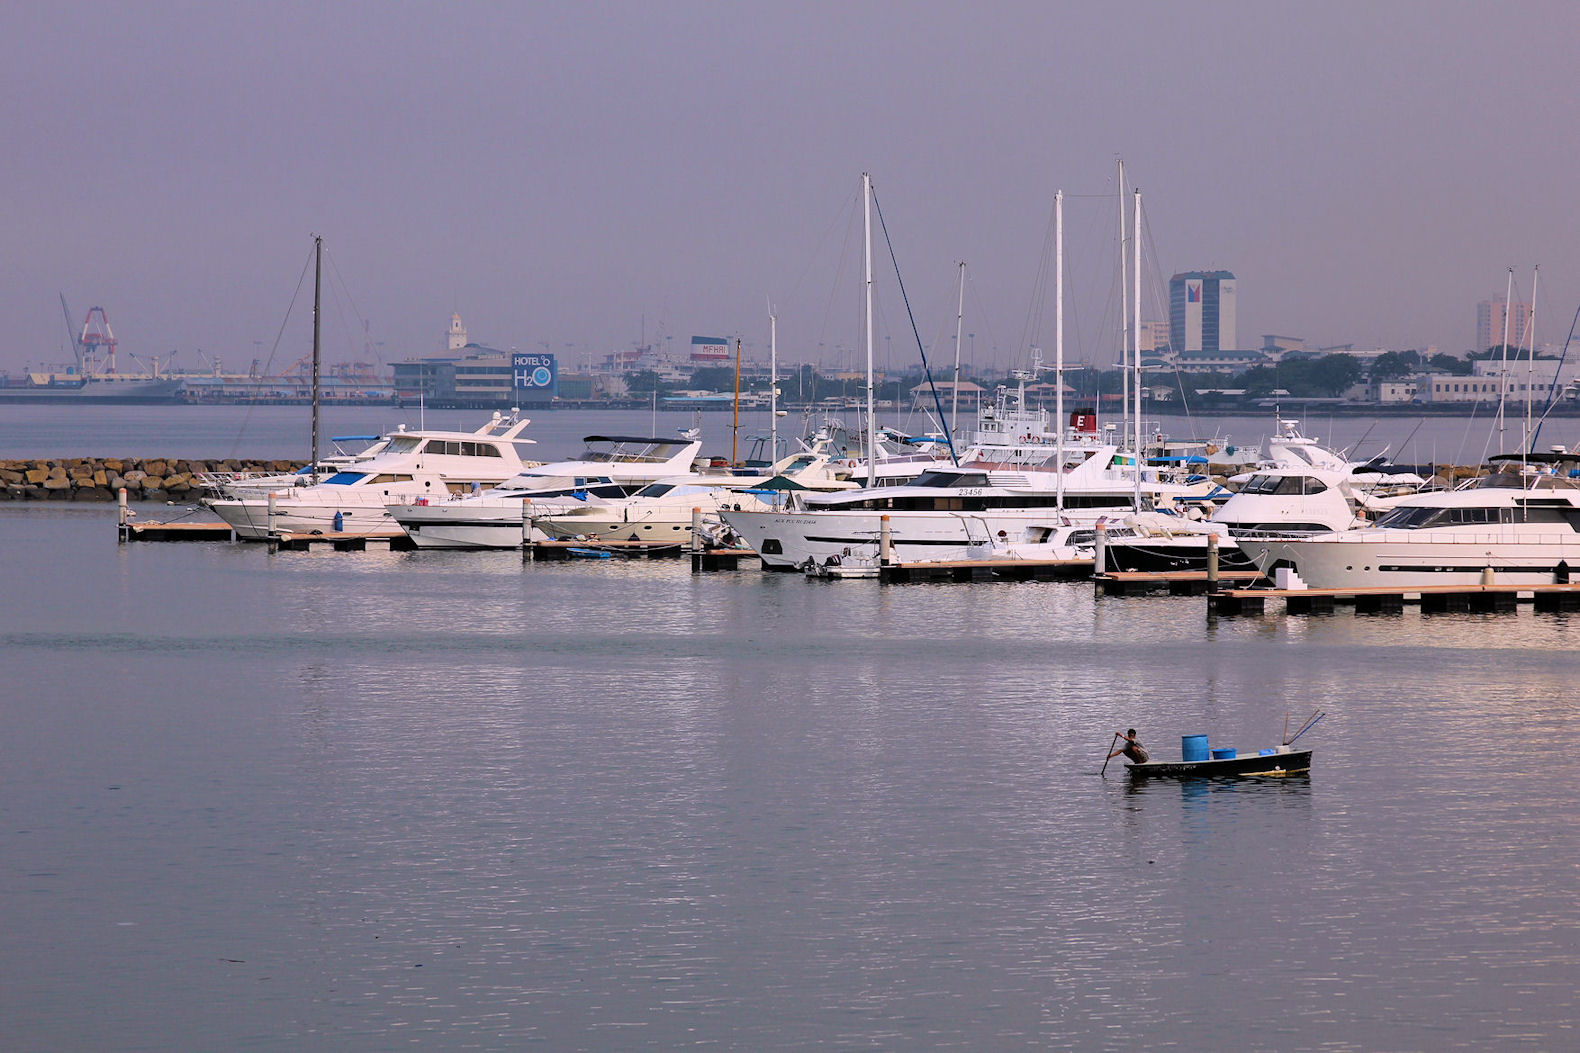 Manila Bayside (3).jpg